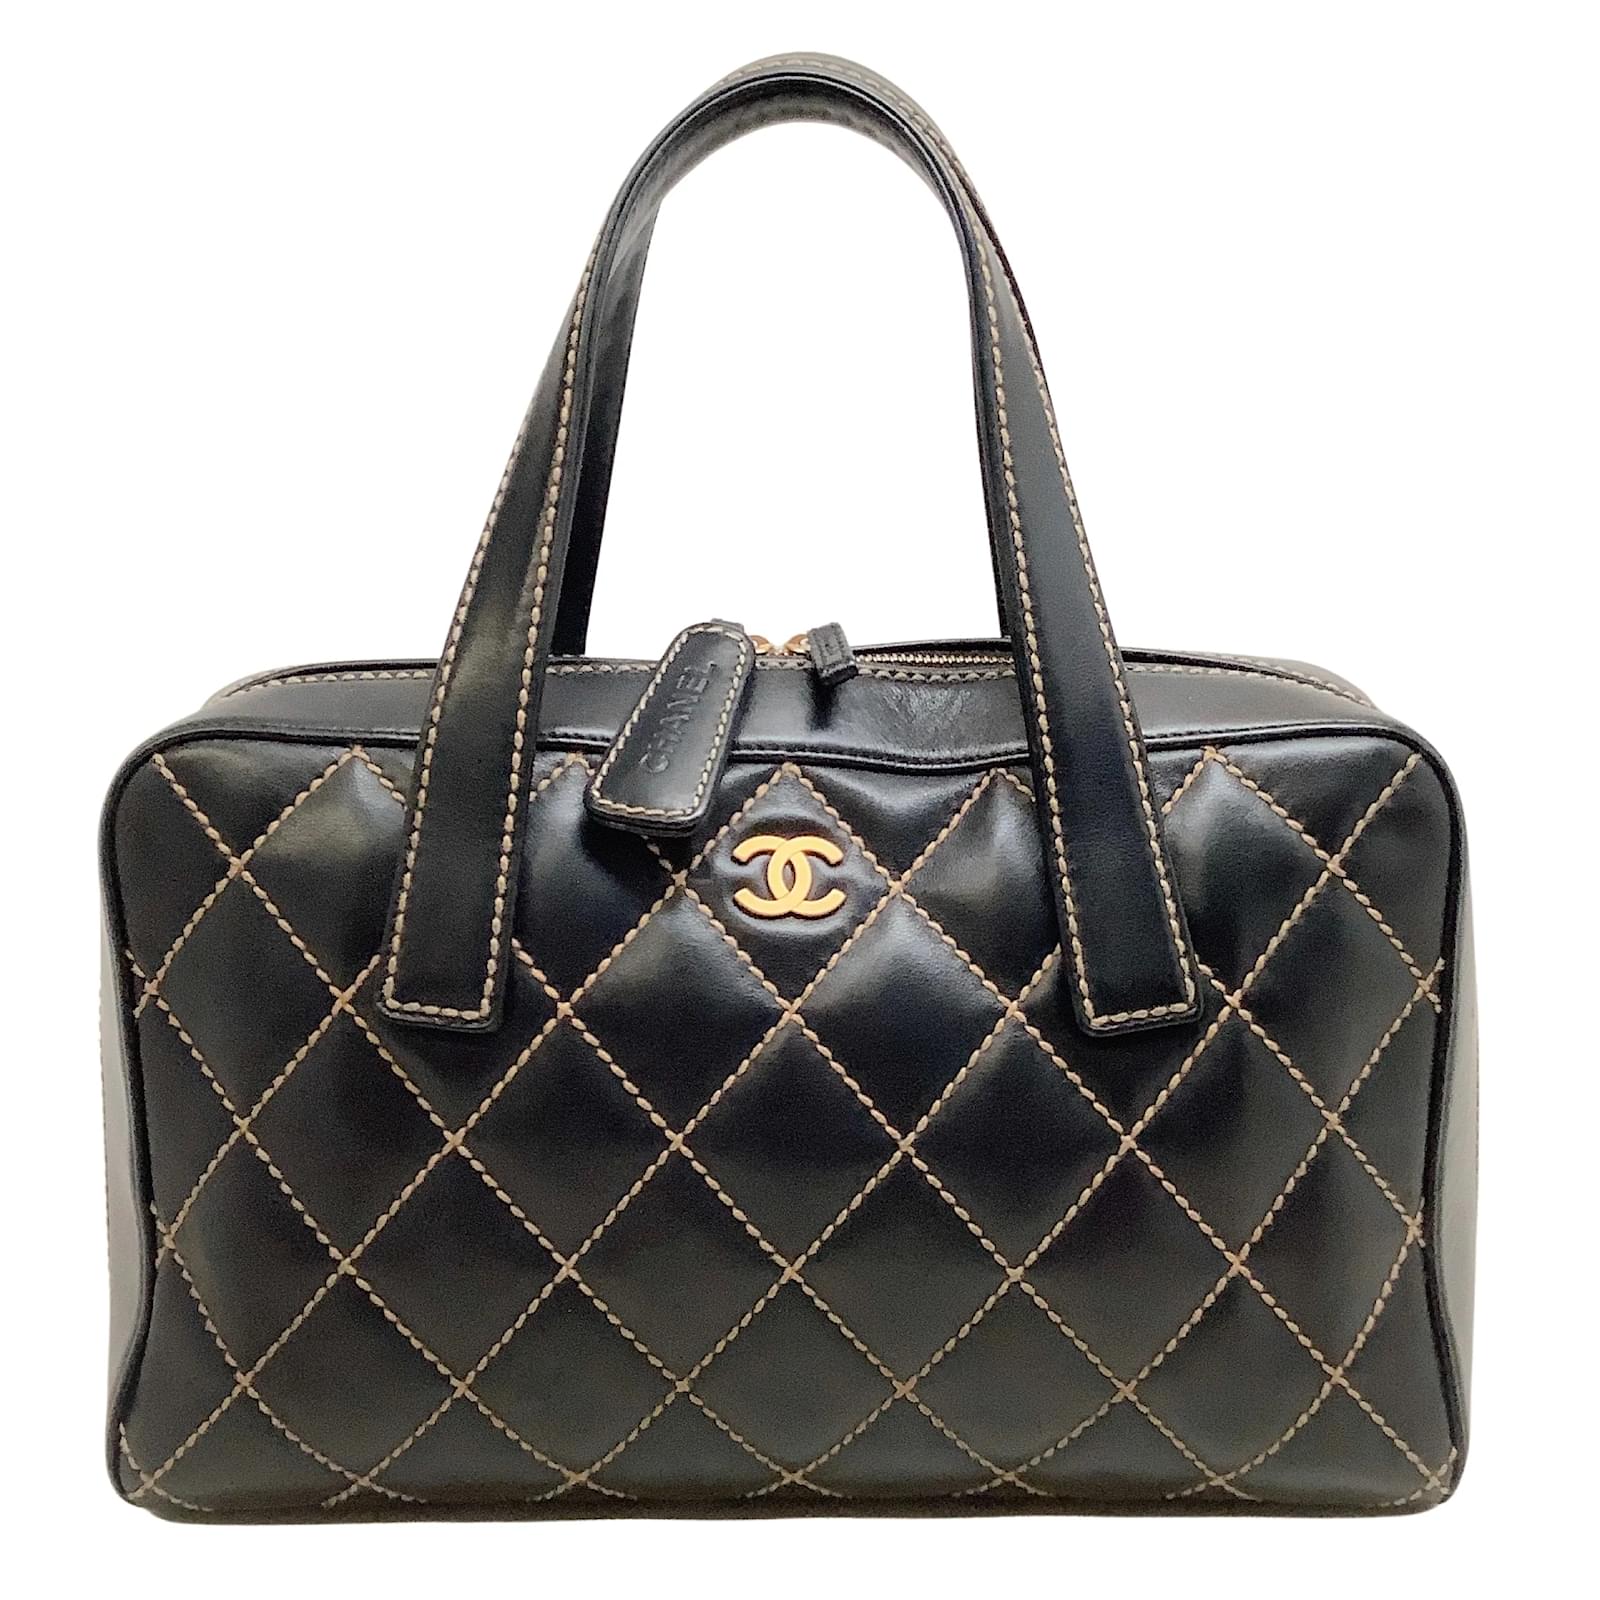 Chanel Surpique Small Tote Bag